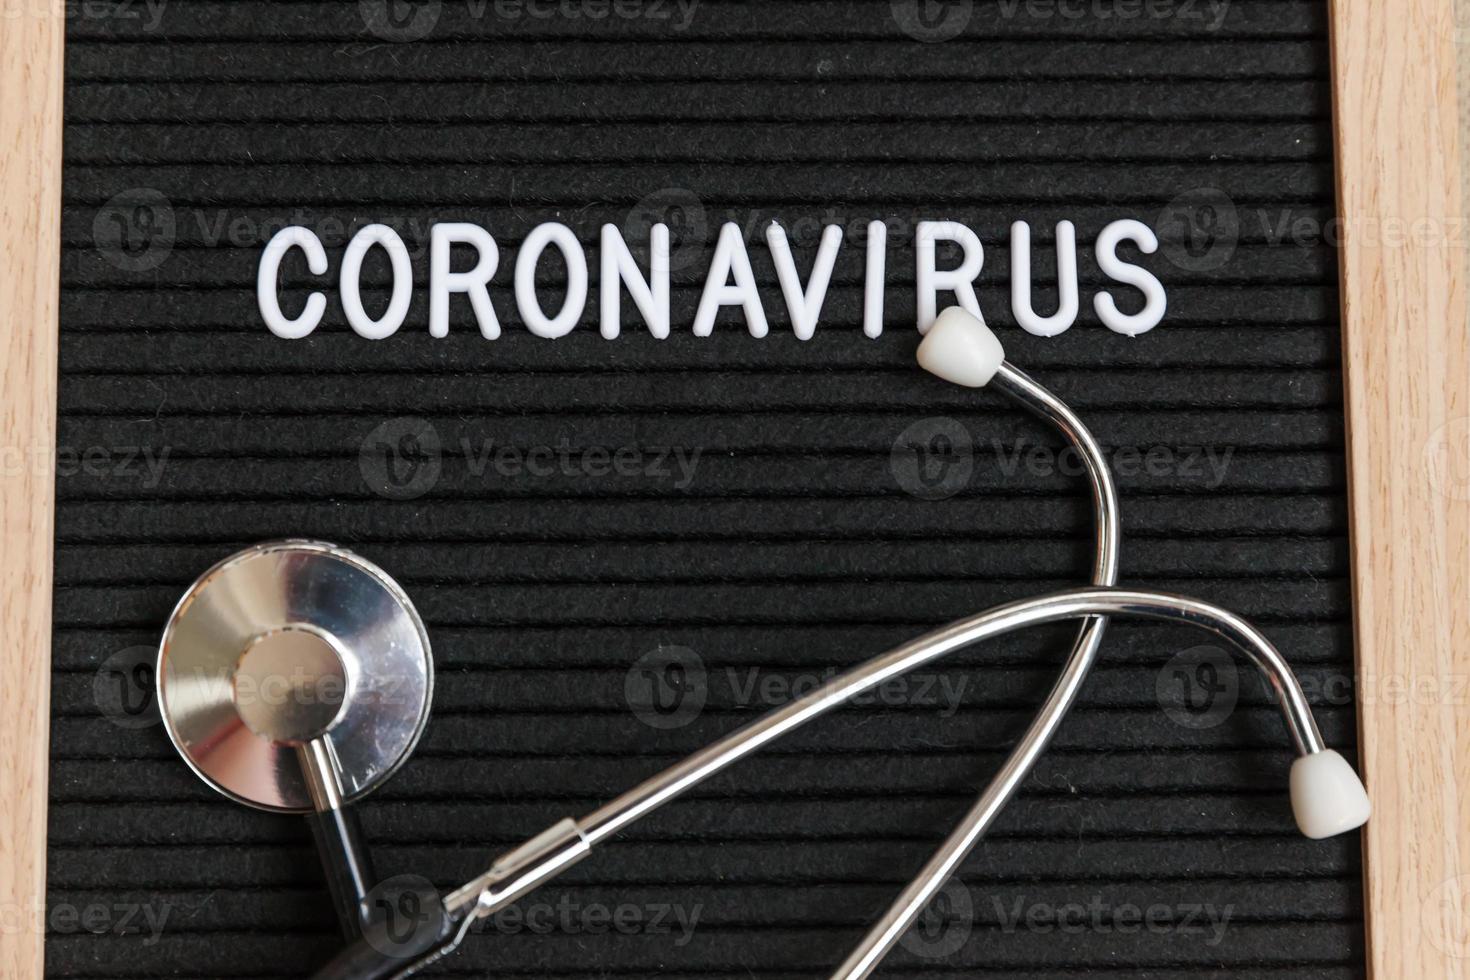 tekstuitdrukking coronavirus en stethoscoop op zwarte letterbordachtergrond. nieuw coronavirus 2019-ncov, mers-cov midden-oosten respiratoir syndroom coronavirus afkomstig uit Wuhan China foto